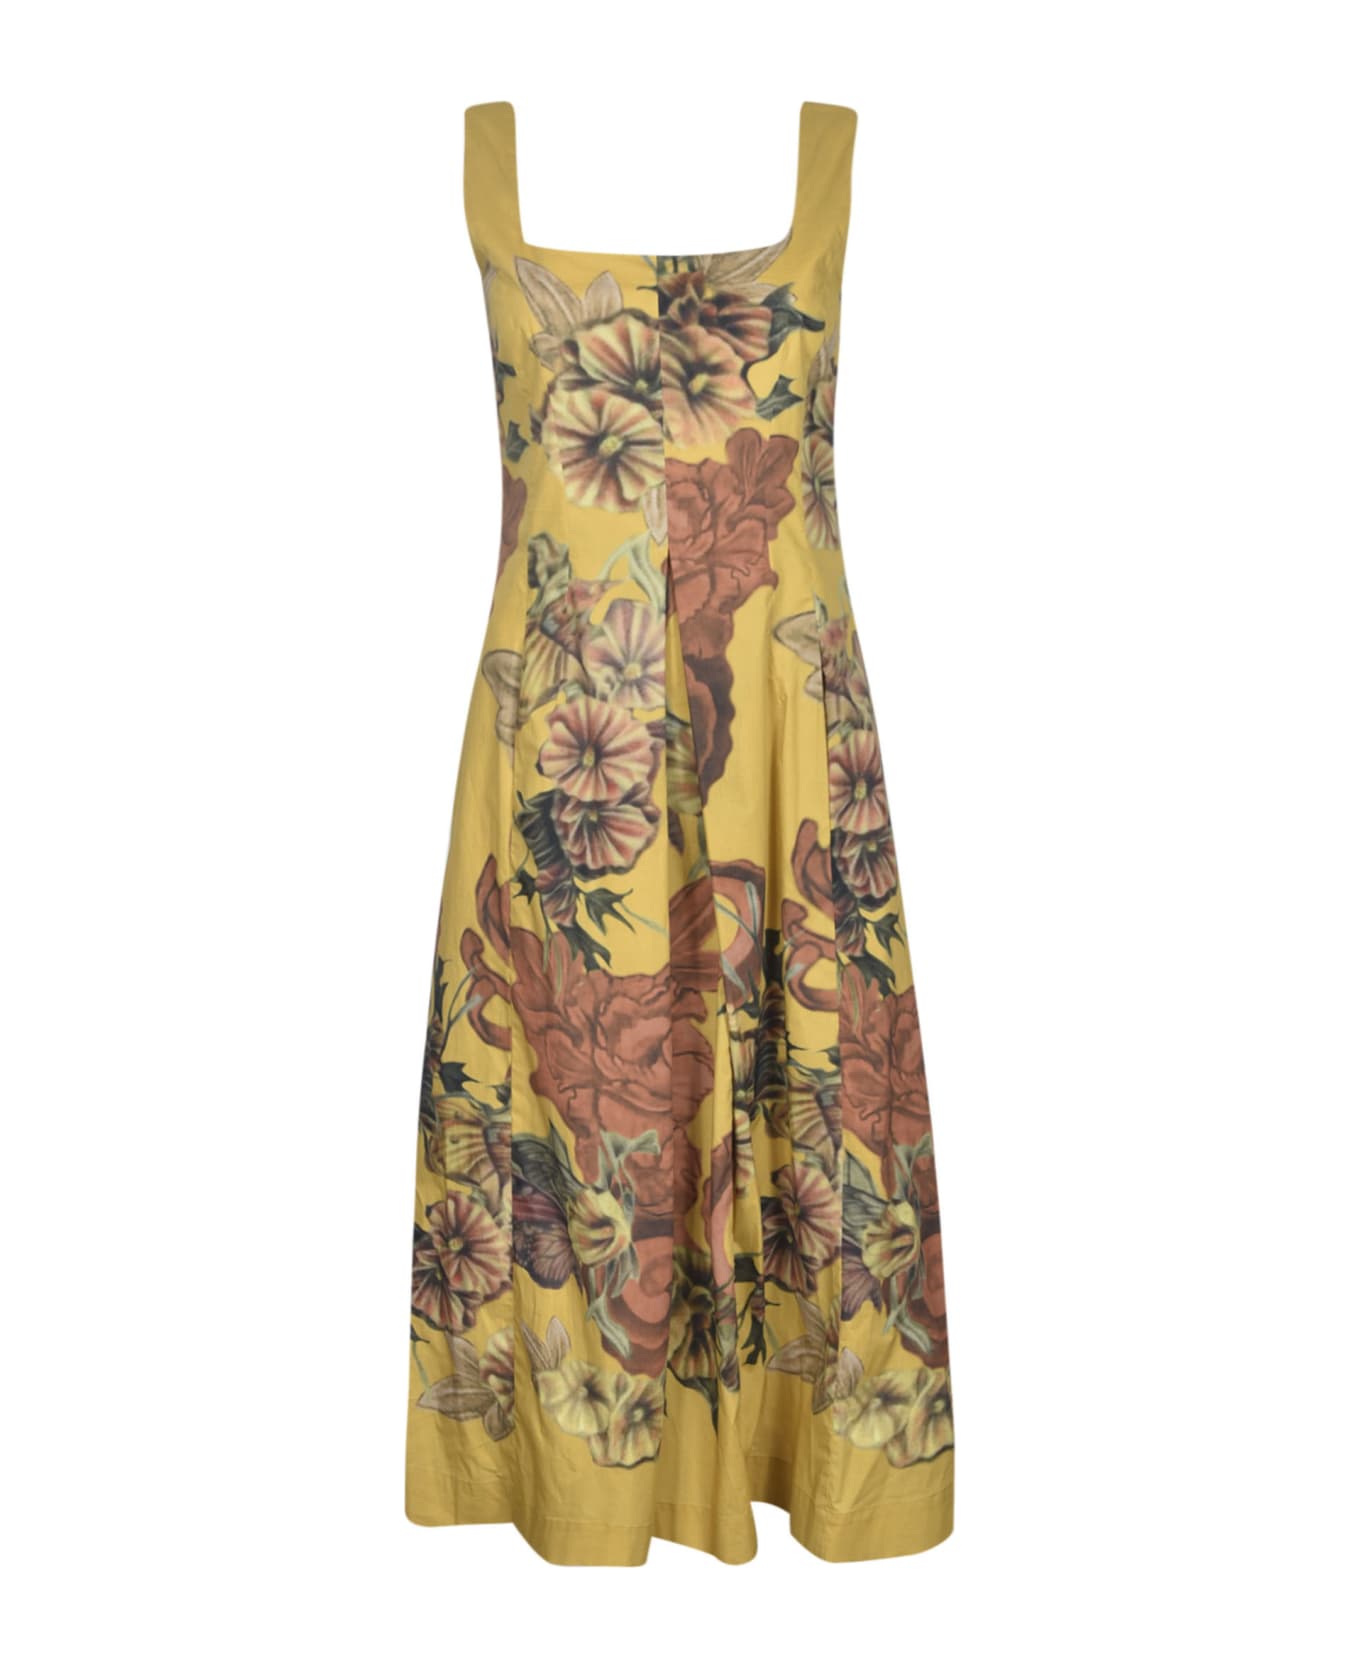 Alberta Ferretti Floral Sleeveless Dress - Yellow/Brown